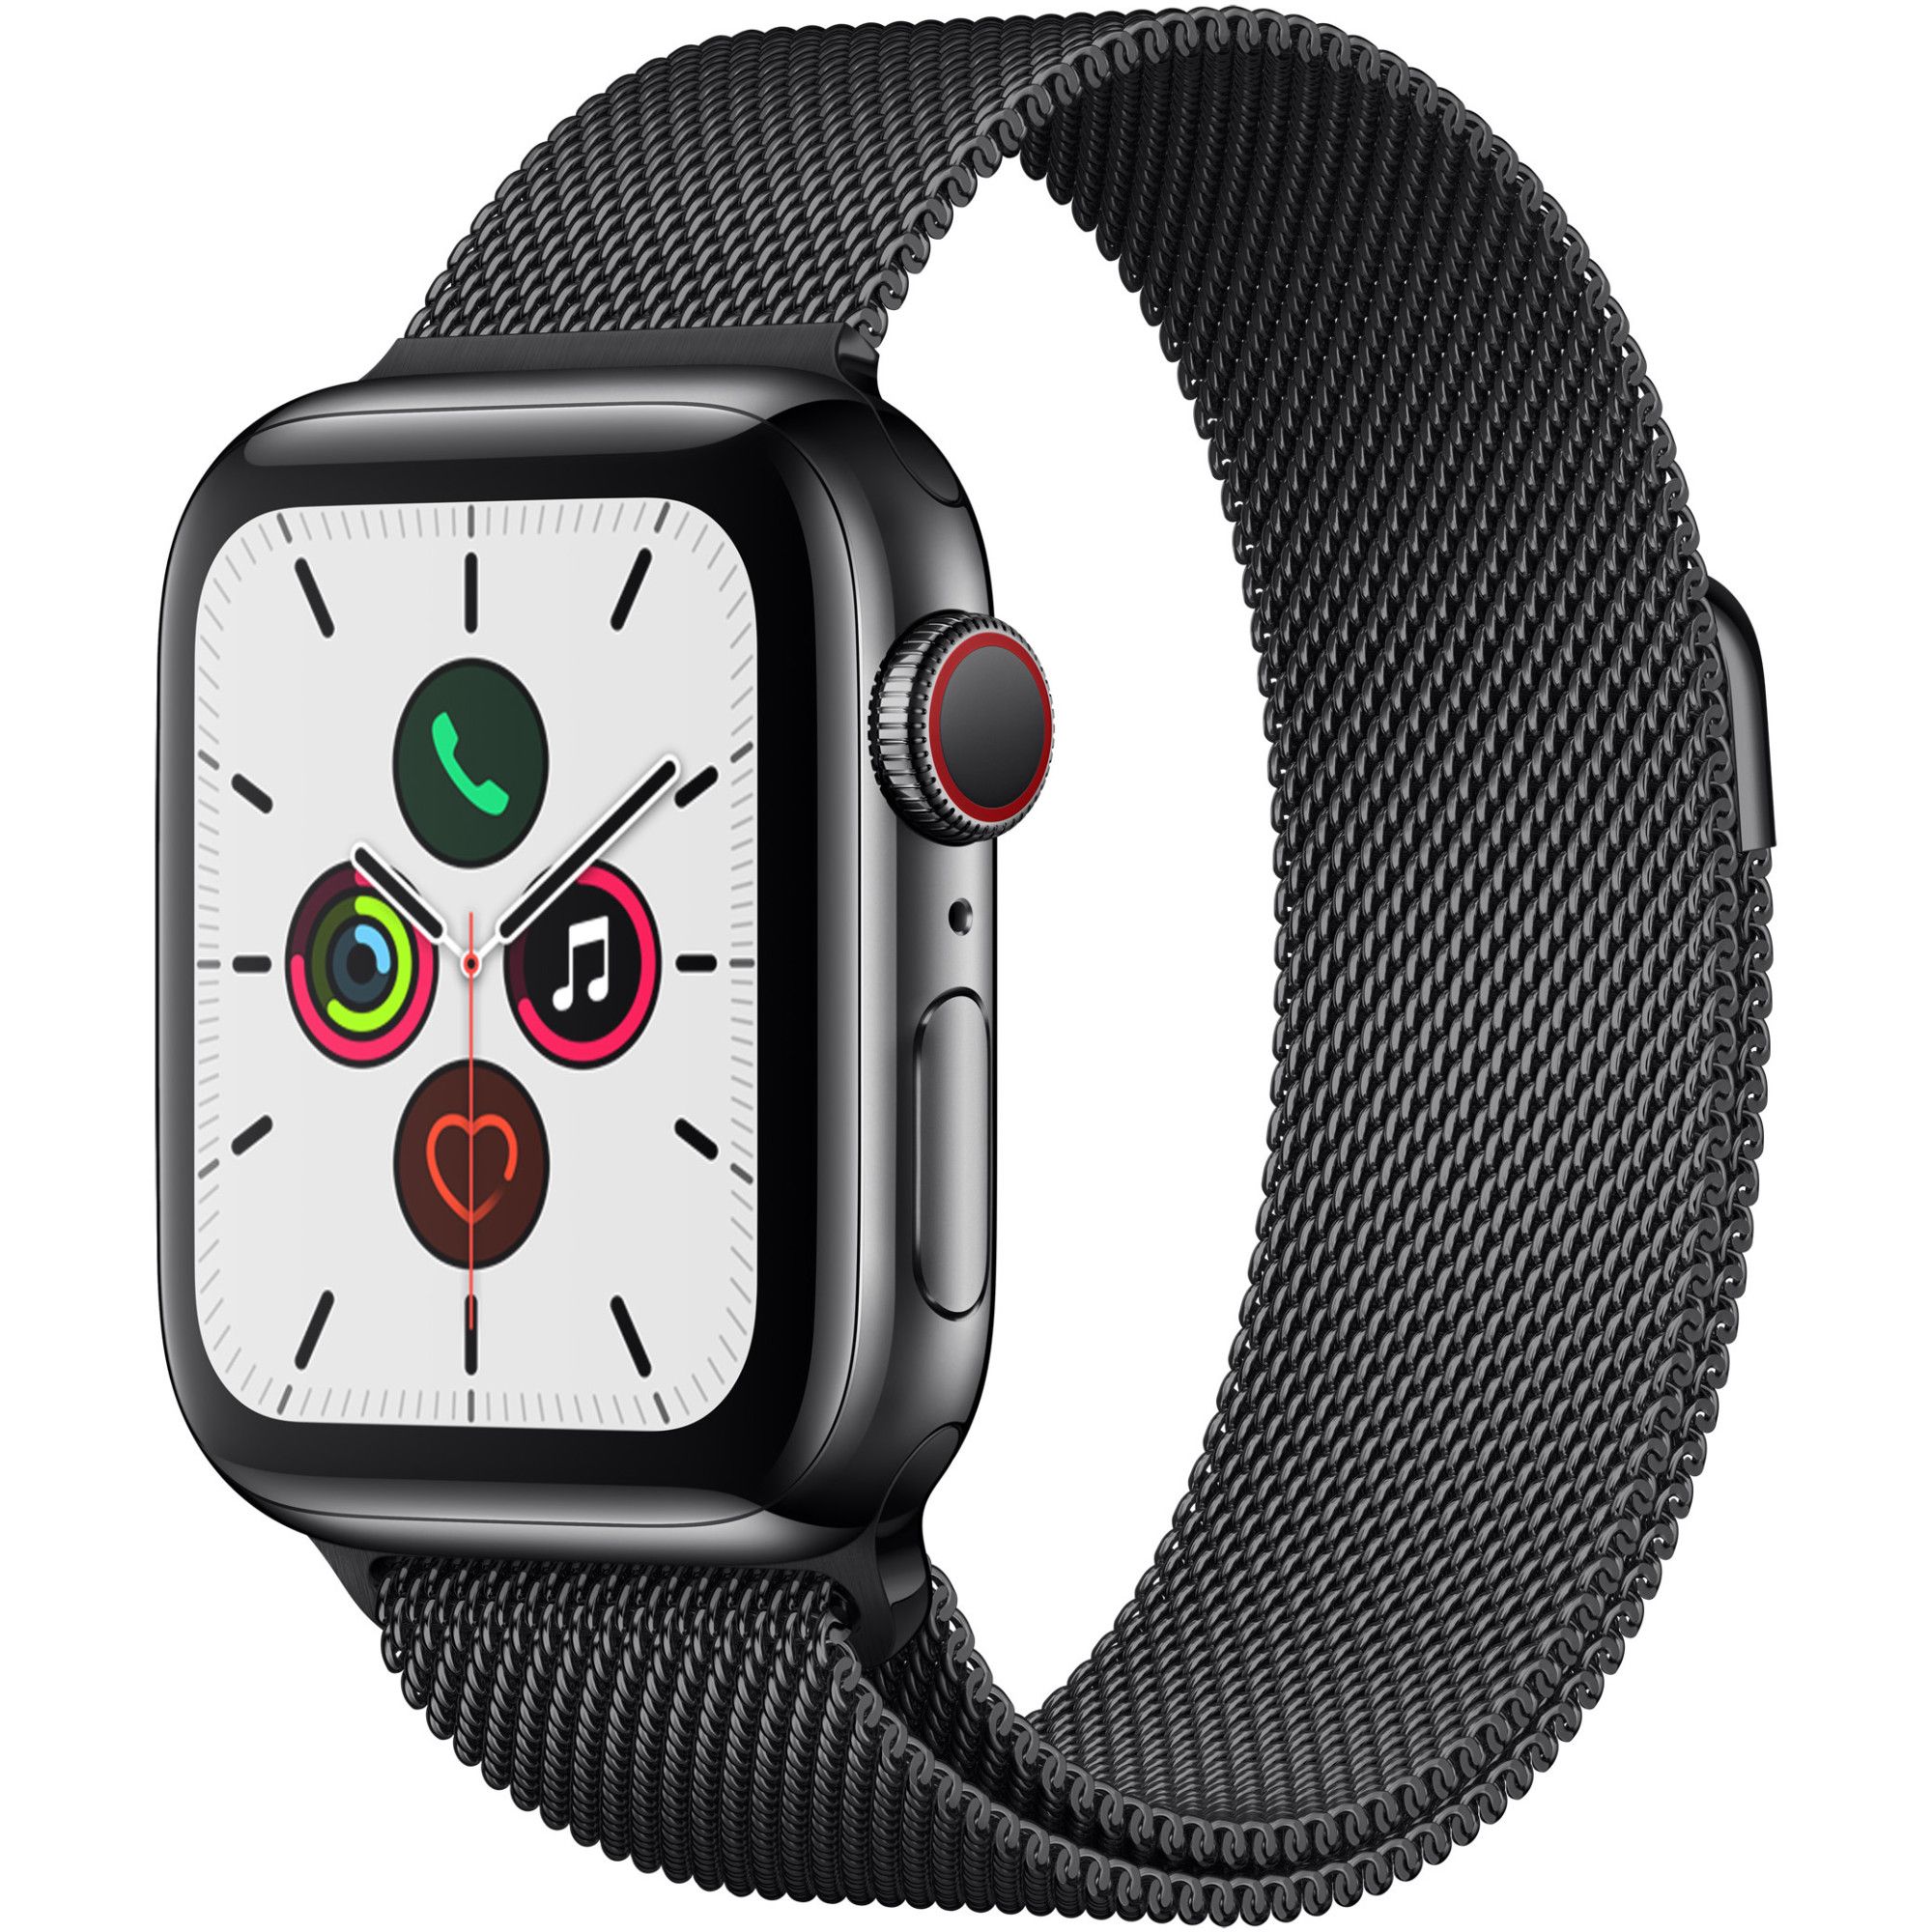 Smartwatch Apple Watch Series 5 GPS + Cellular 40mm 4G Carcasa Space Black Stainless Steel Bratara Space Black Milanese